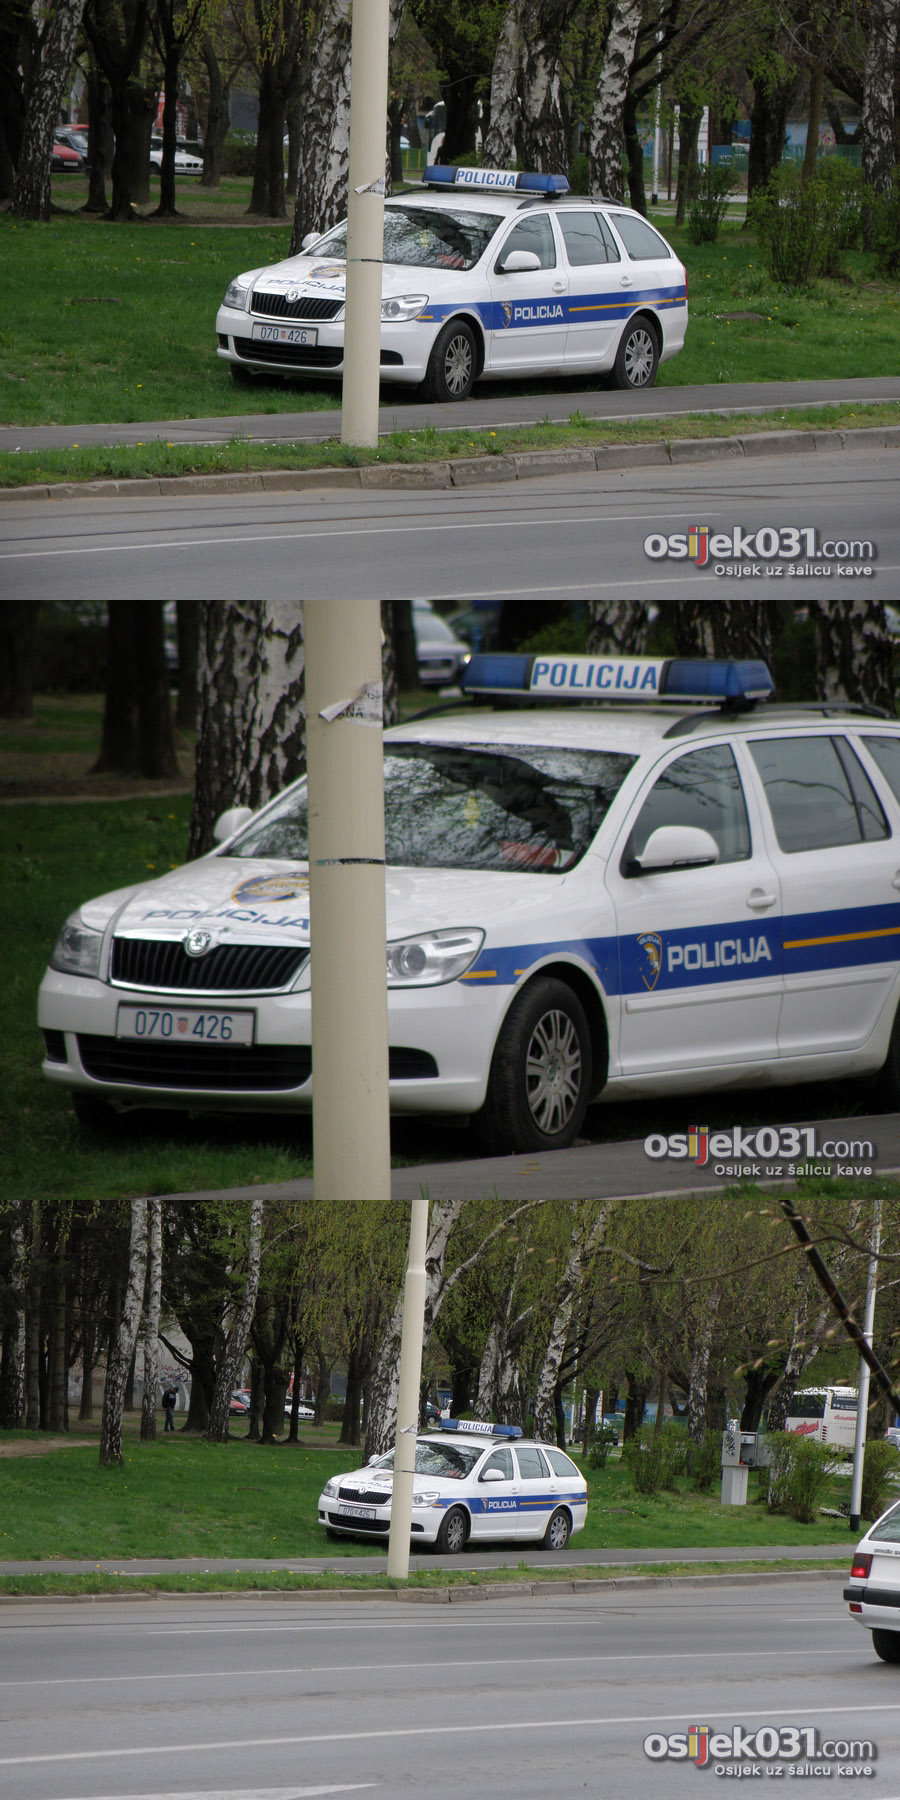 Quod licet Iovi, non licet bovi

Foto: [b]Free[/b]

Kljune rijei: parkiranje nepropisno policija 